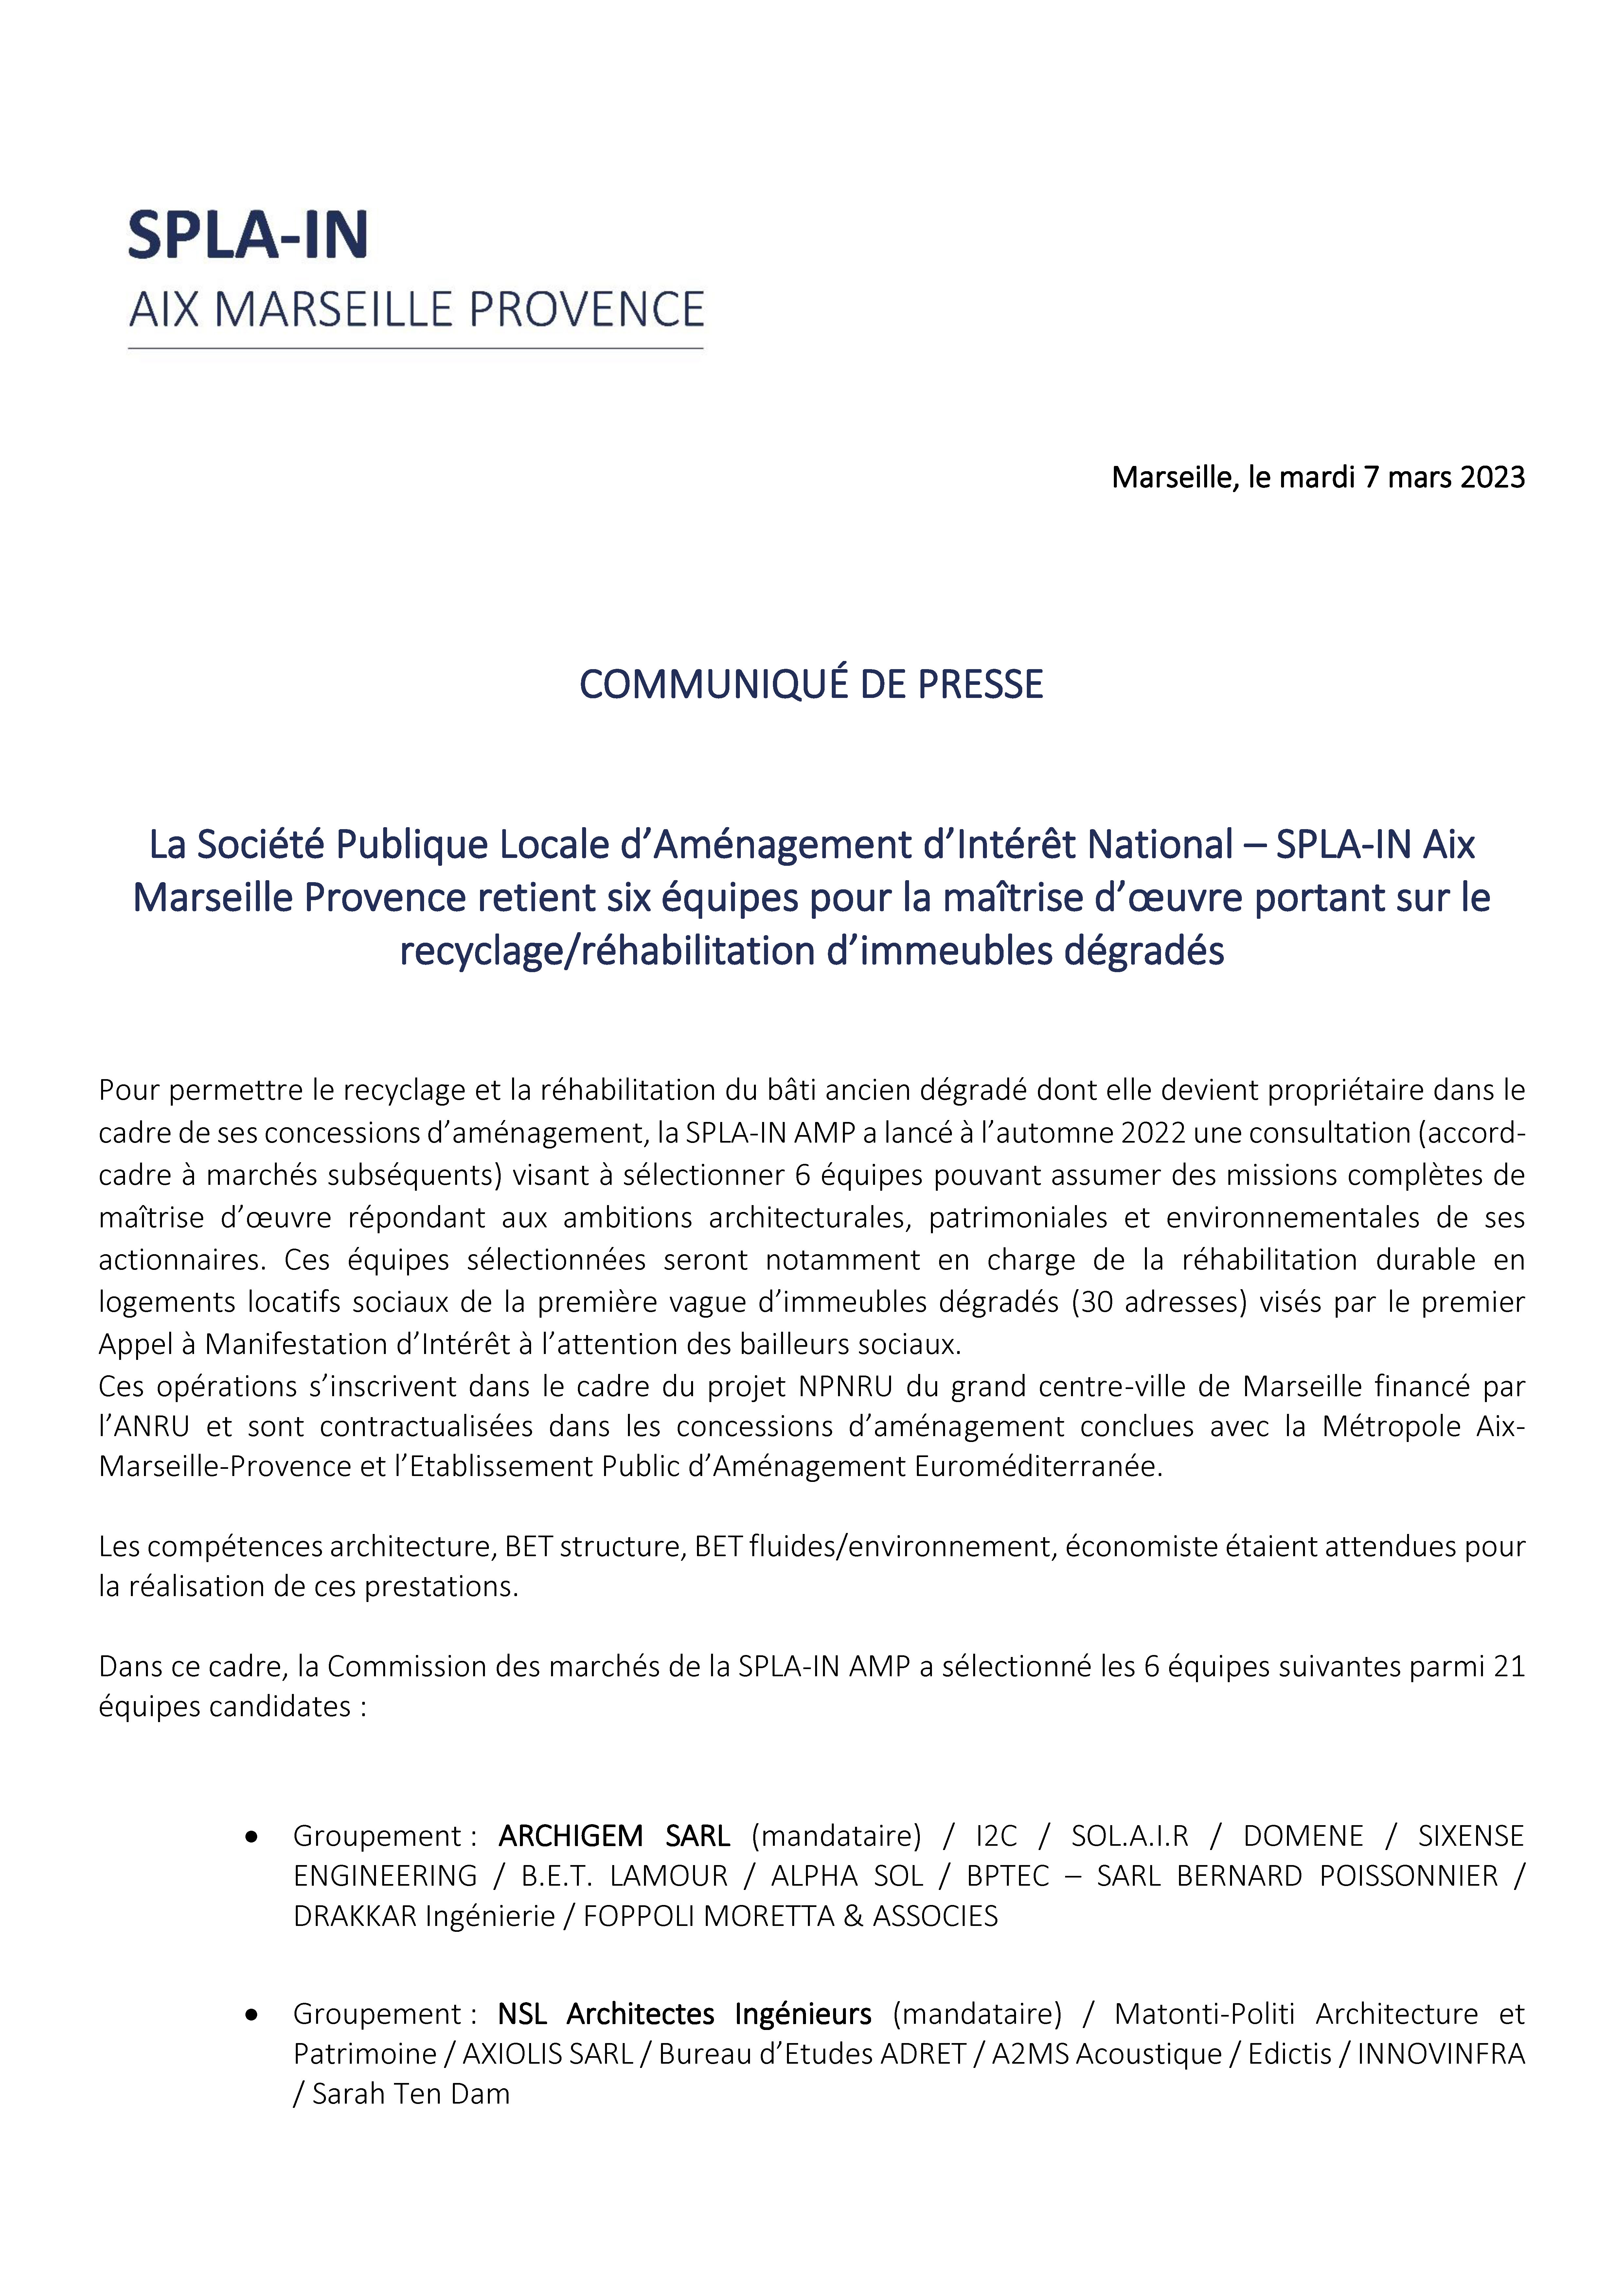 Communiqué de presse SPLA IN AMP_07 mars 2023_Page 1